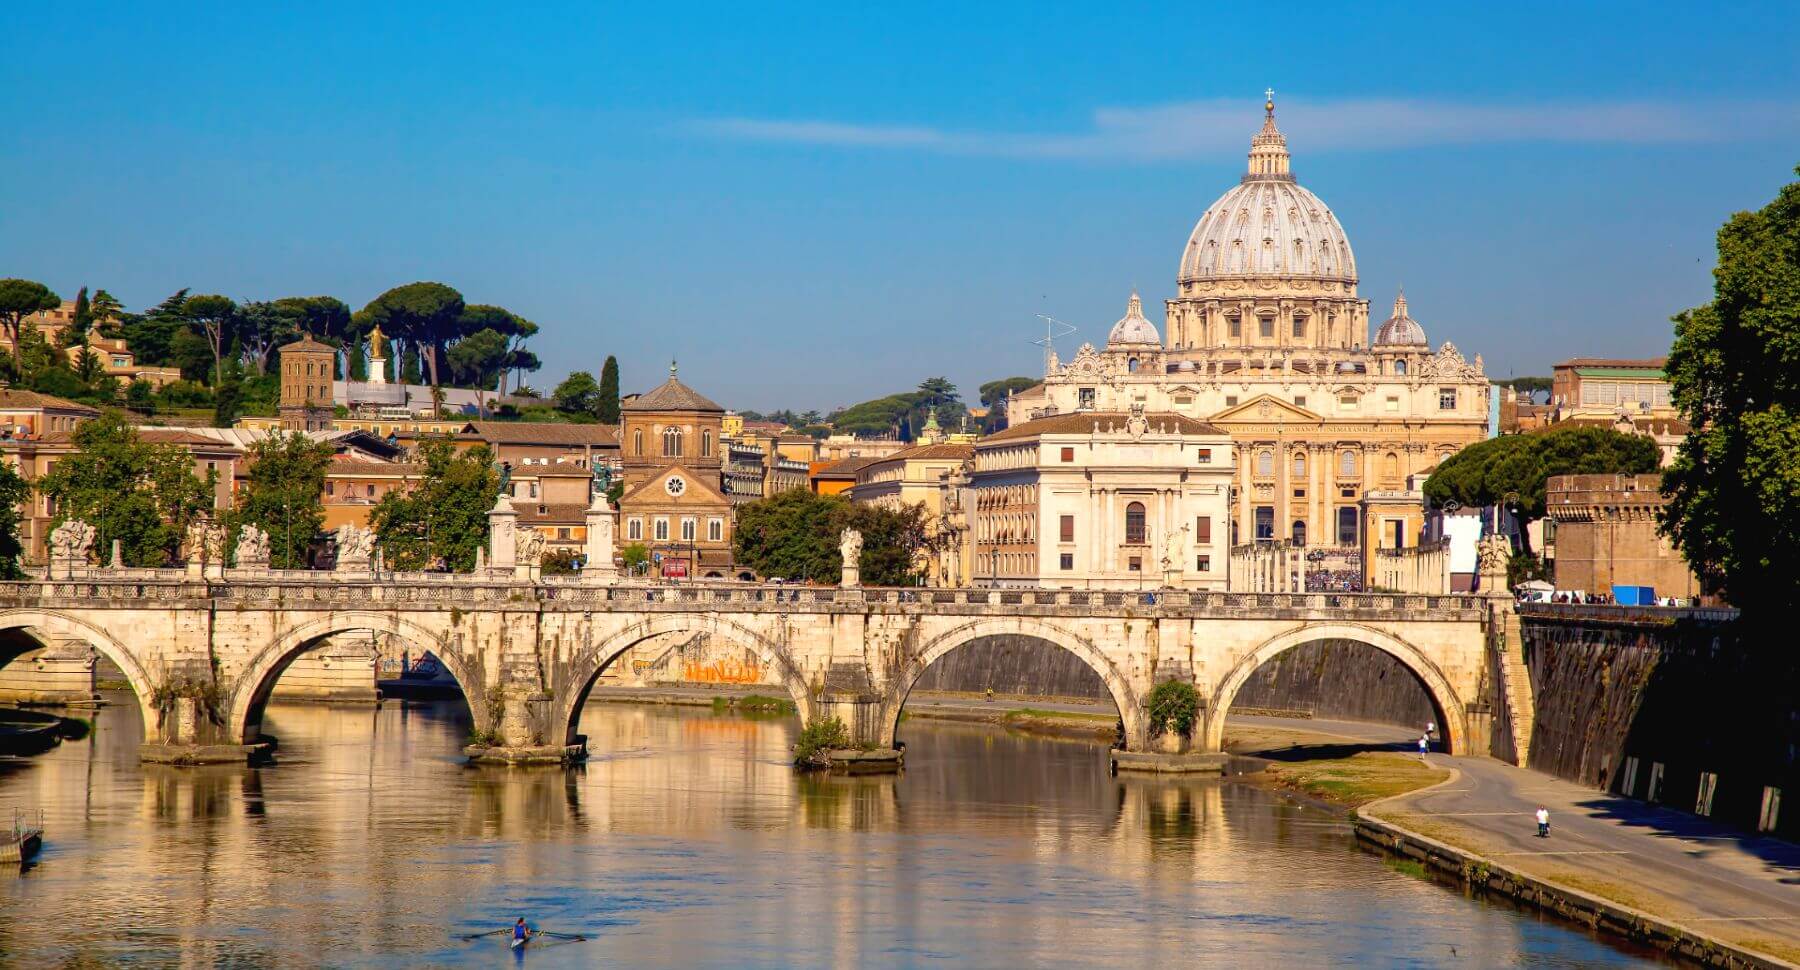 HomepageBG_Vatican Italy_1800x970